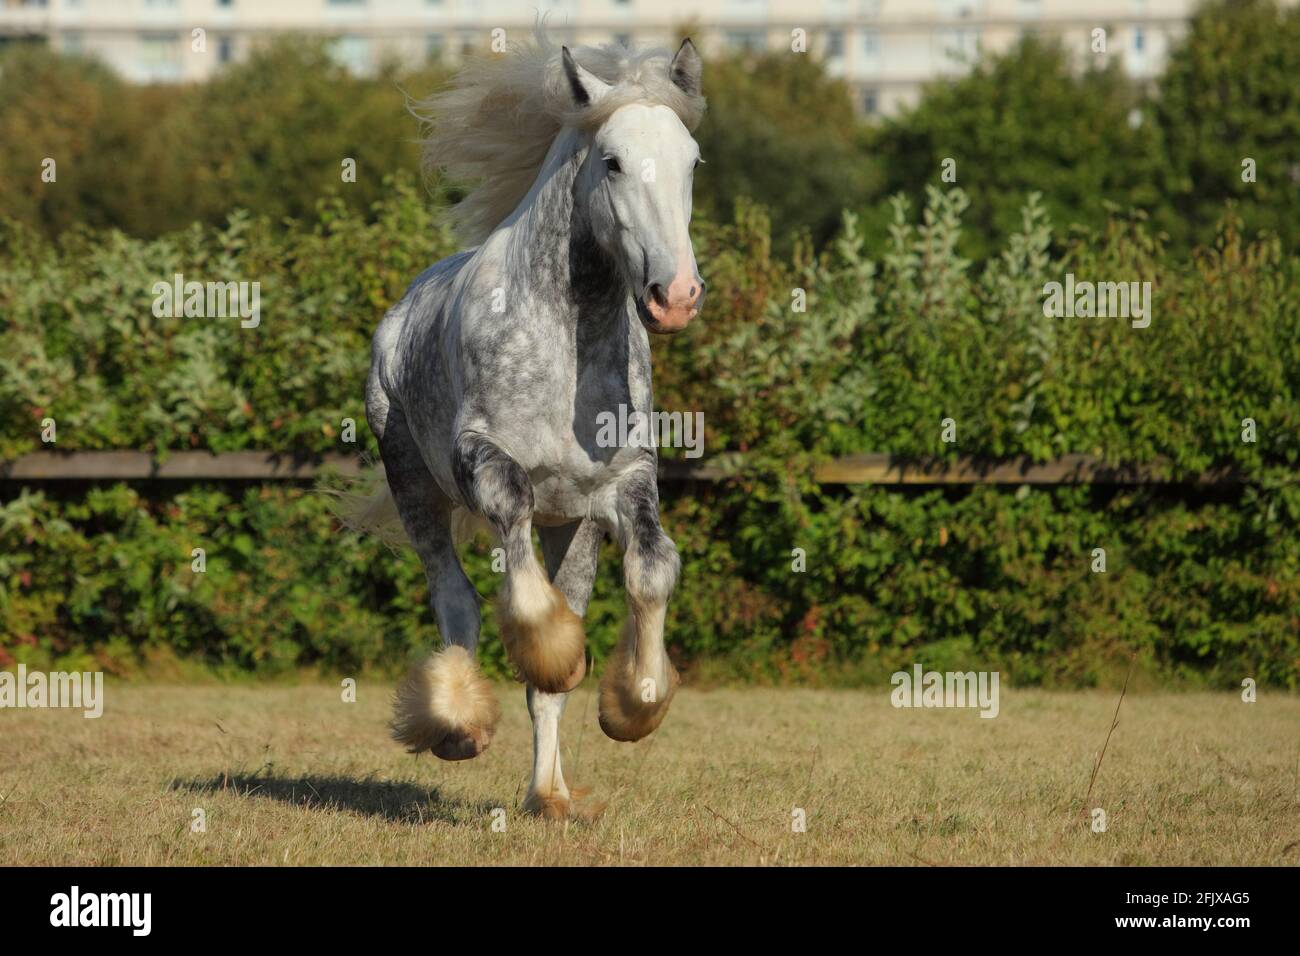 Portrait of dapple gray draft Persheron horse galloping in paddock Stock Photo